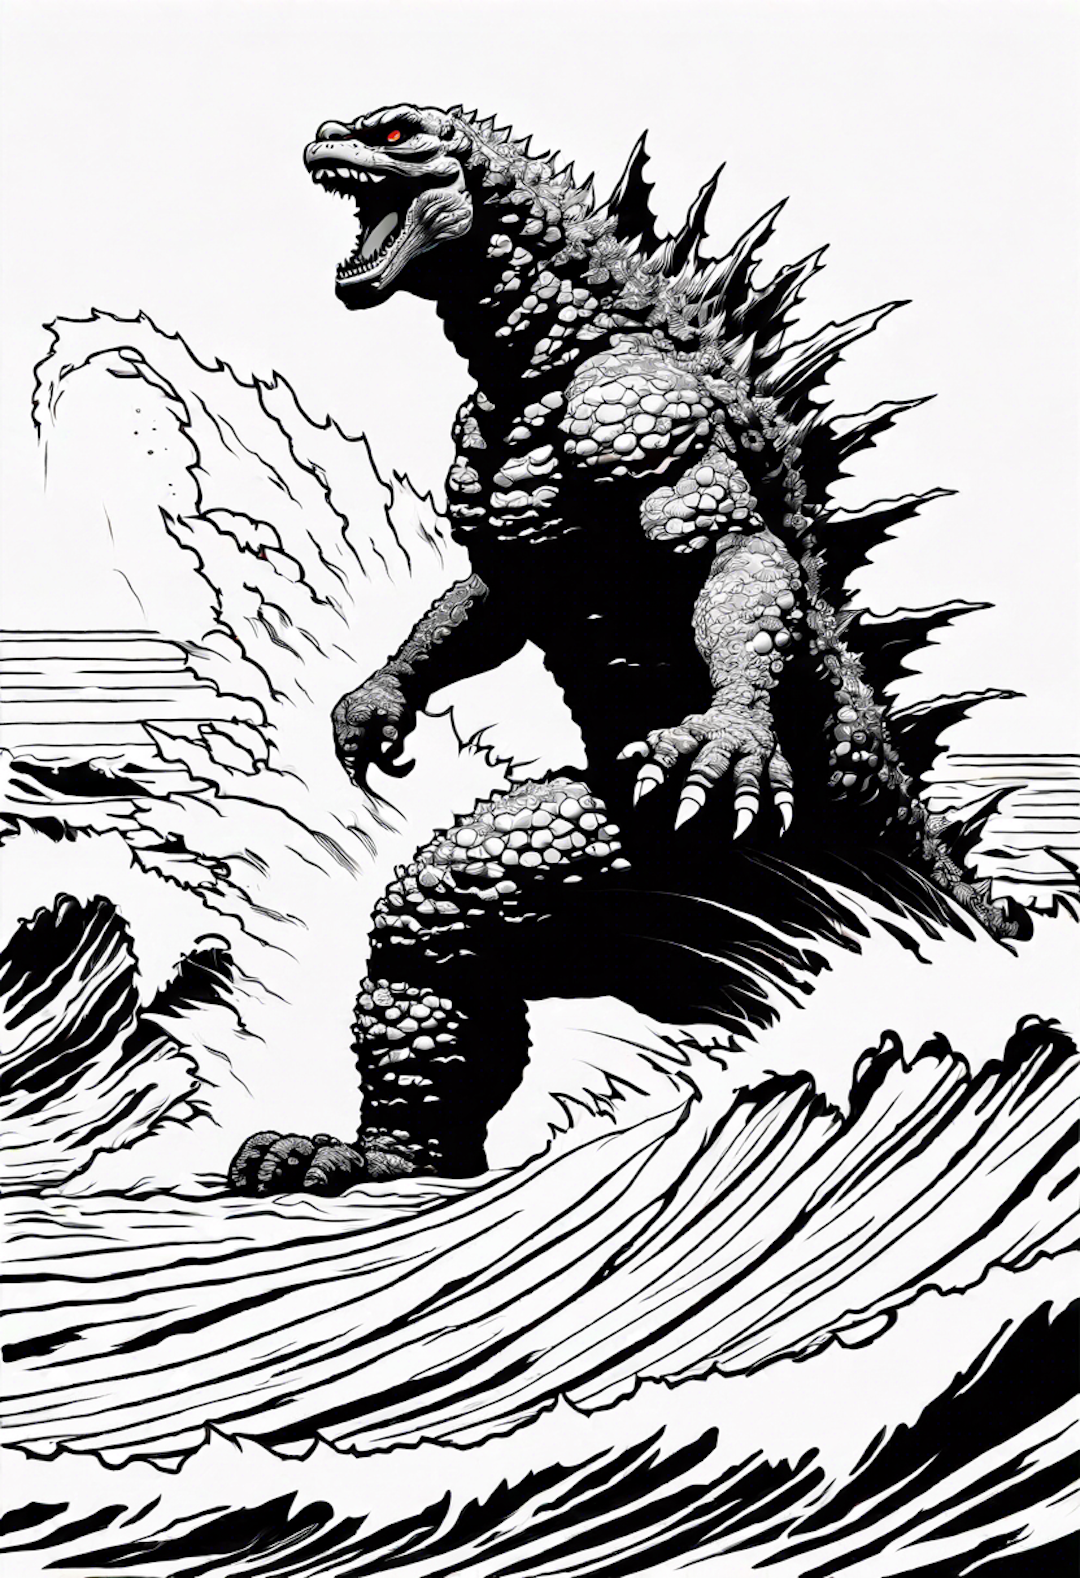 Godzilla emerging from the roaring waves